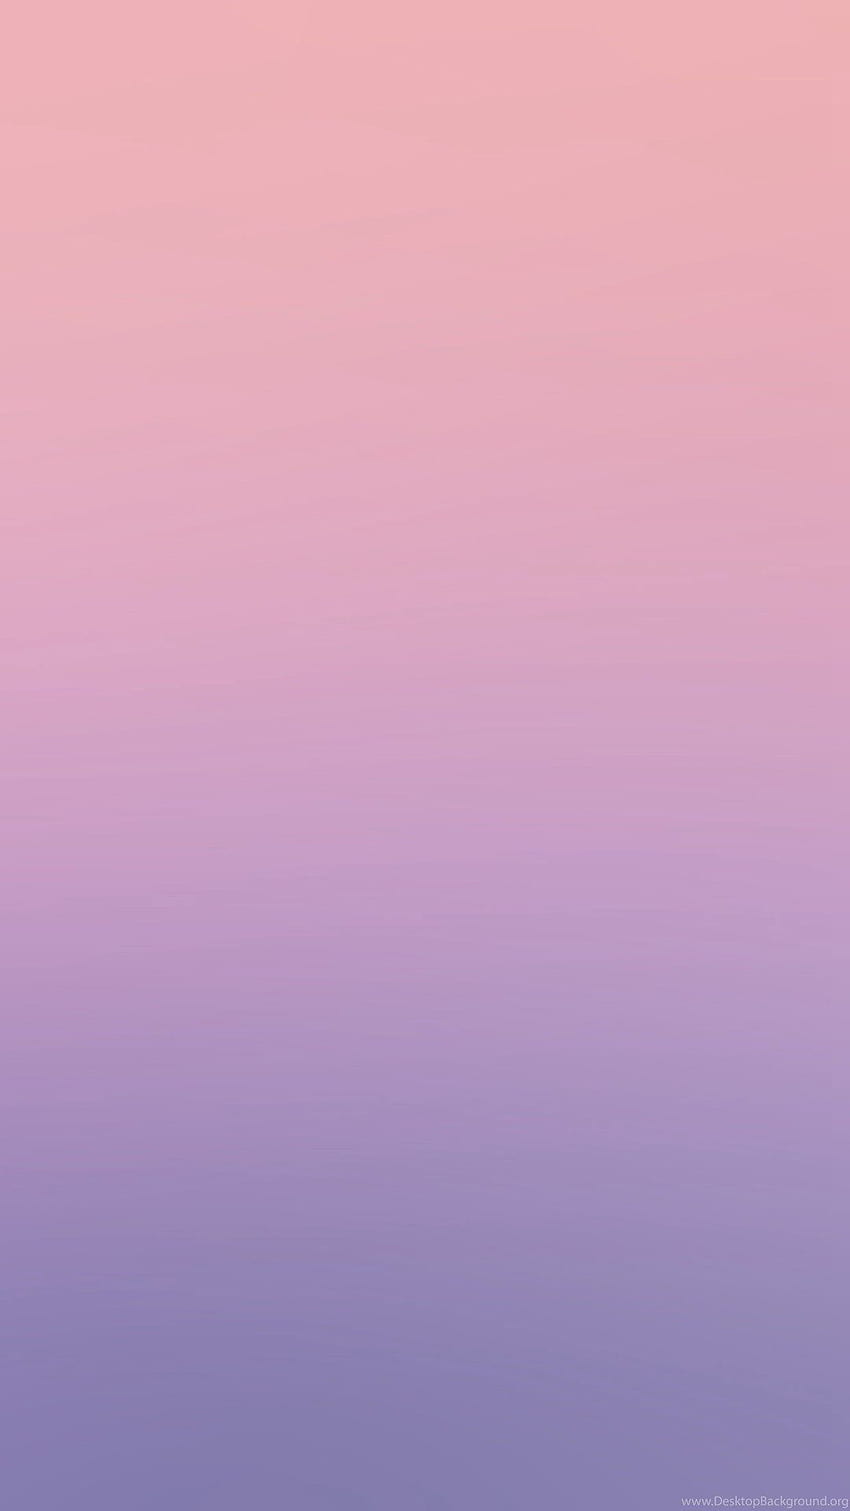 Rosa iPhone 6 Hintergrund, hellrosa HD-Handy-Hintergrundbild